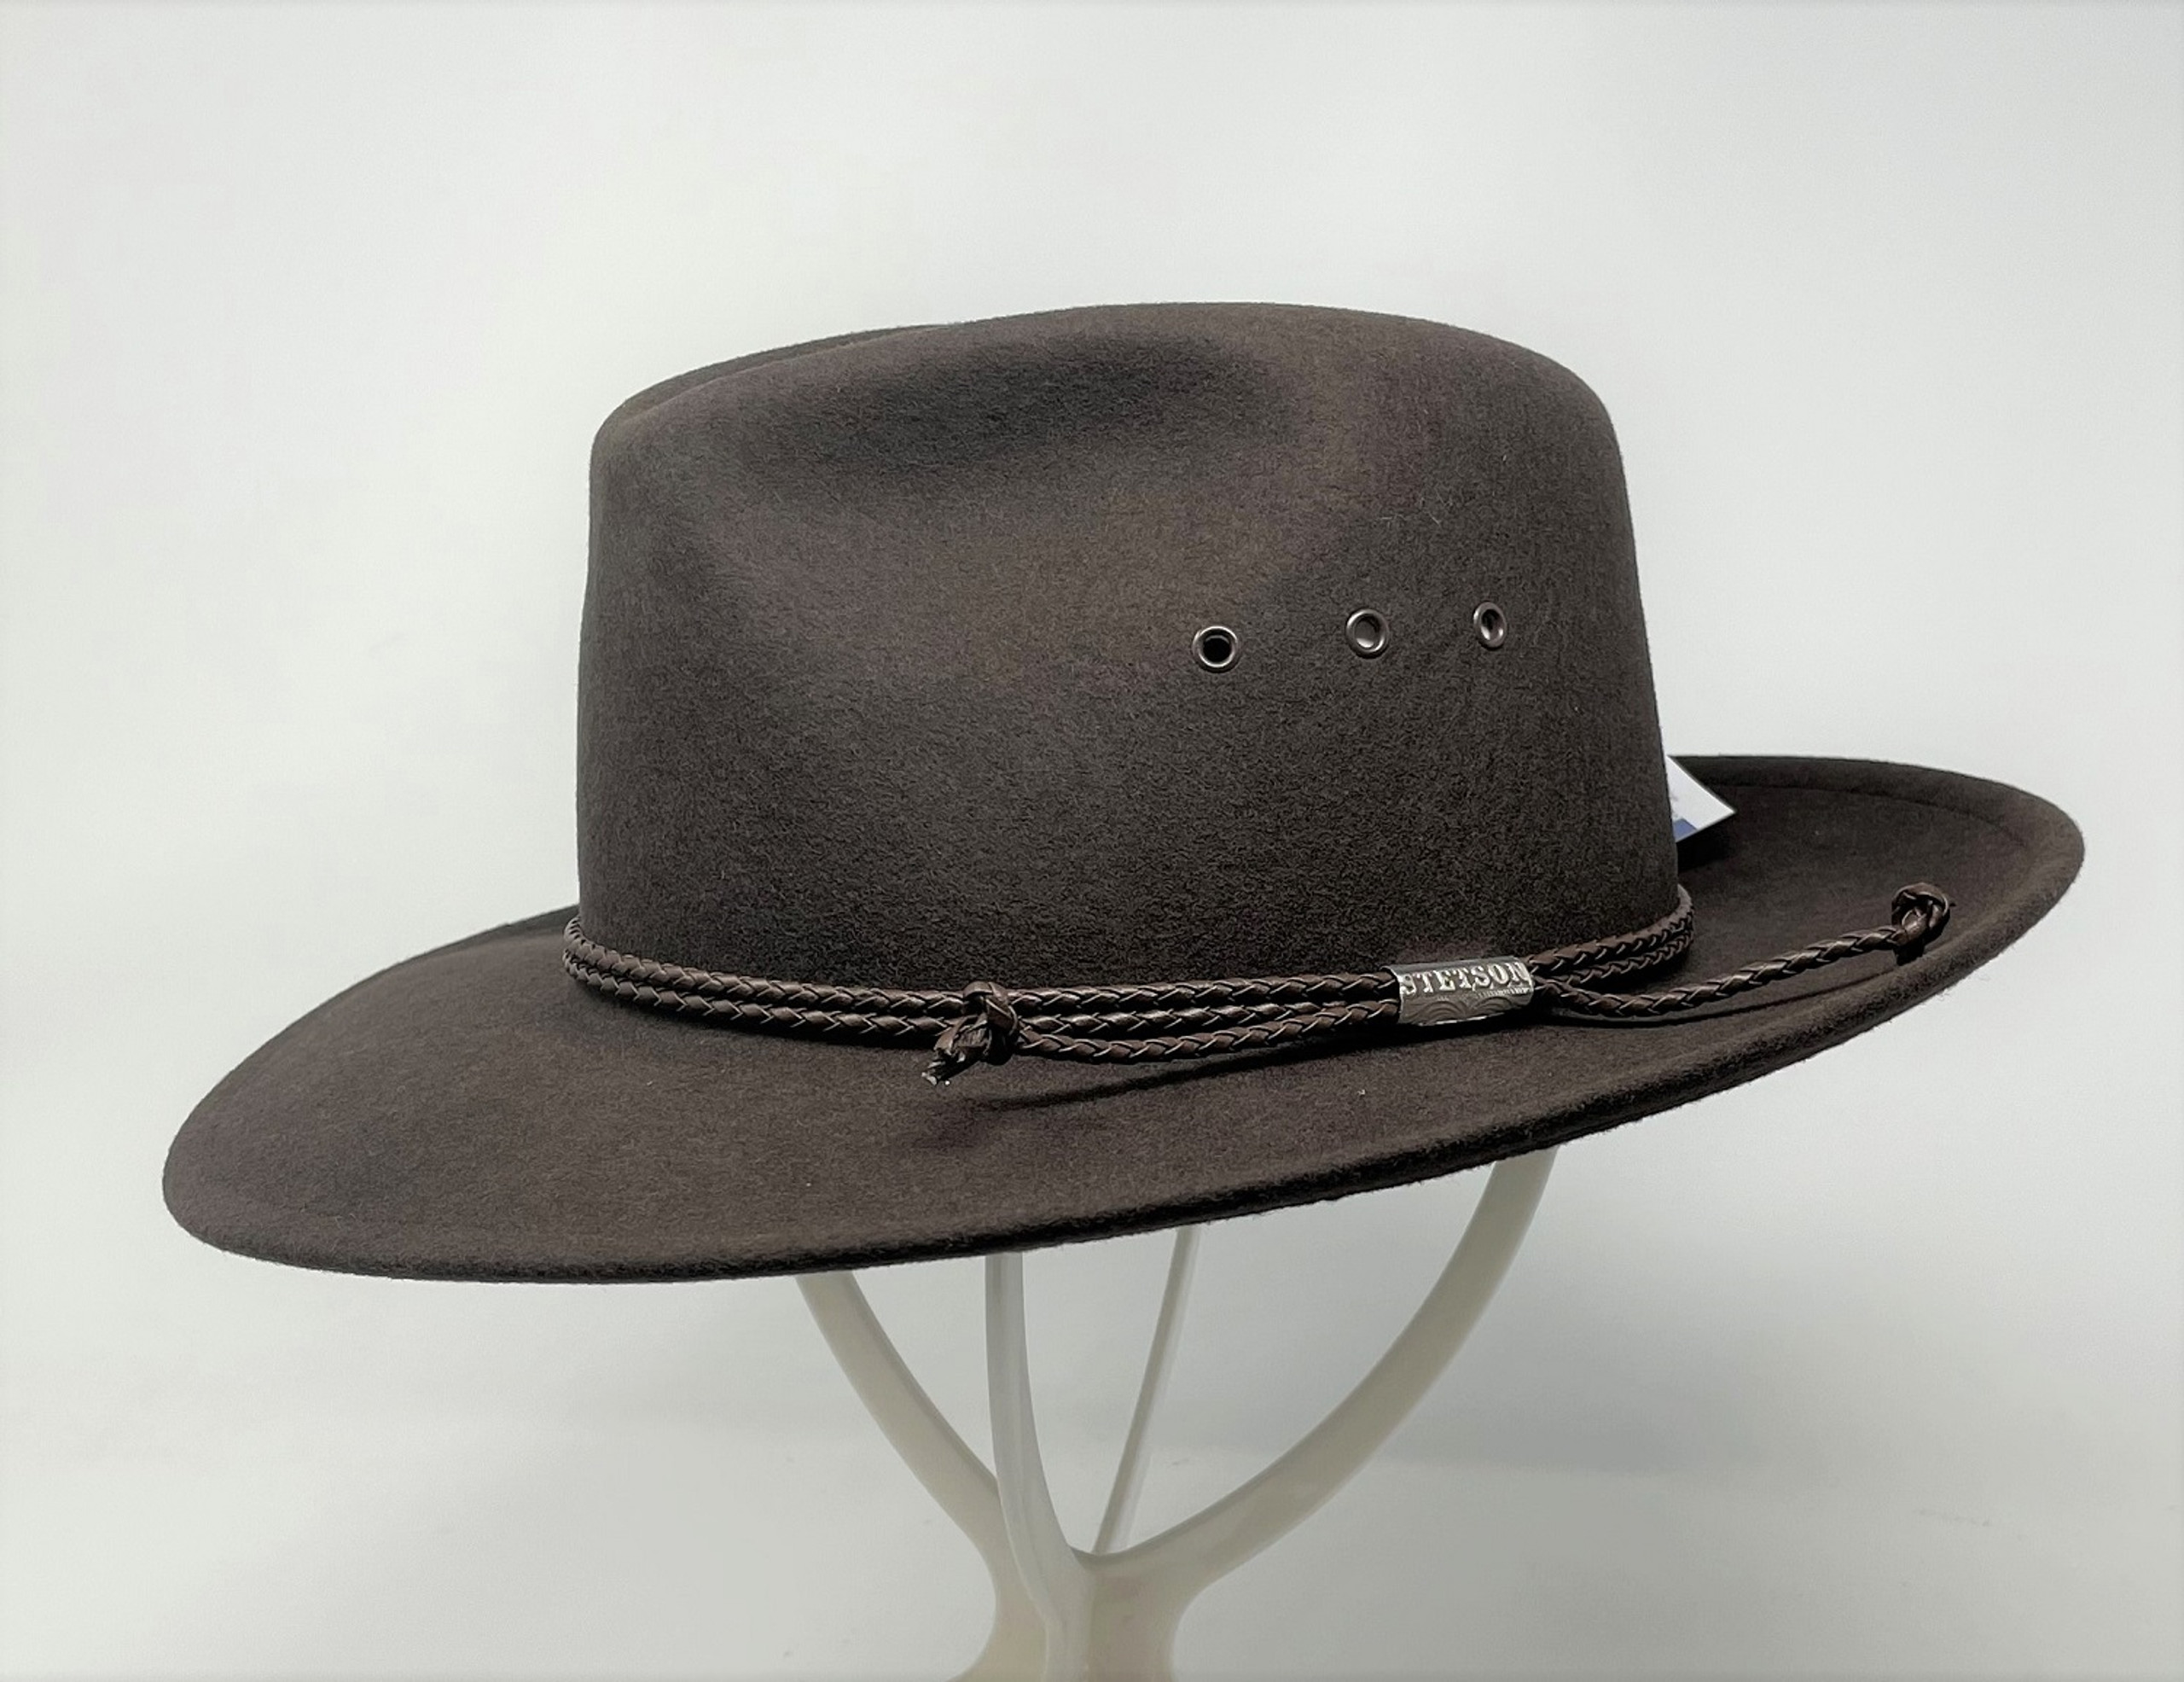 Stetson Crossover Wool Felt Cowboy/Fedora Hat - One 2 mini Ranch